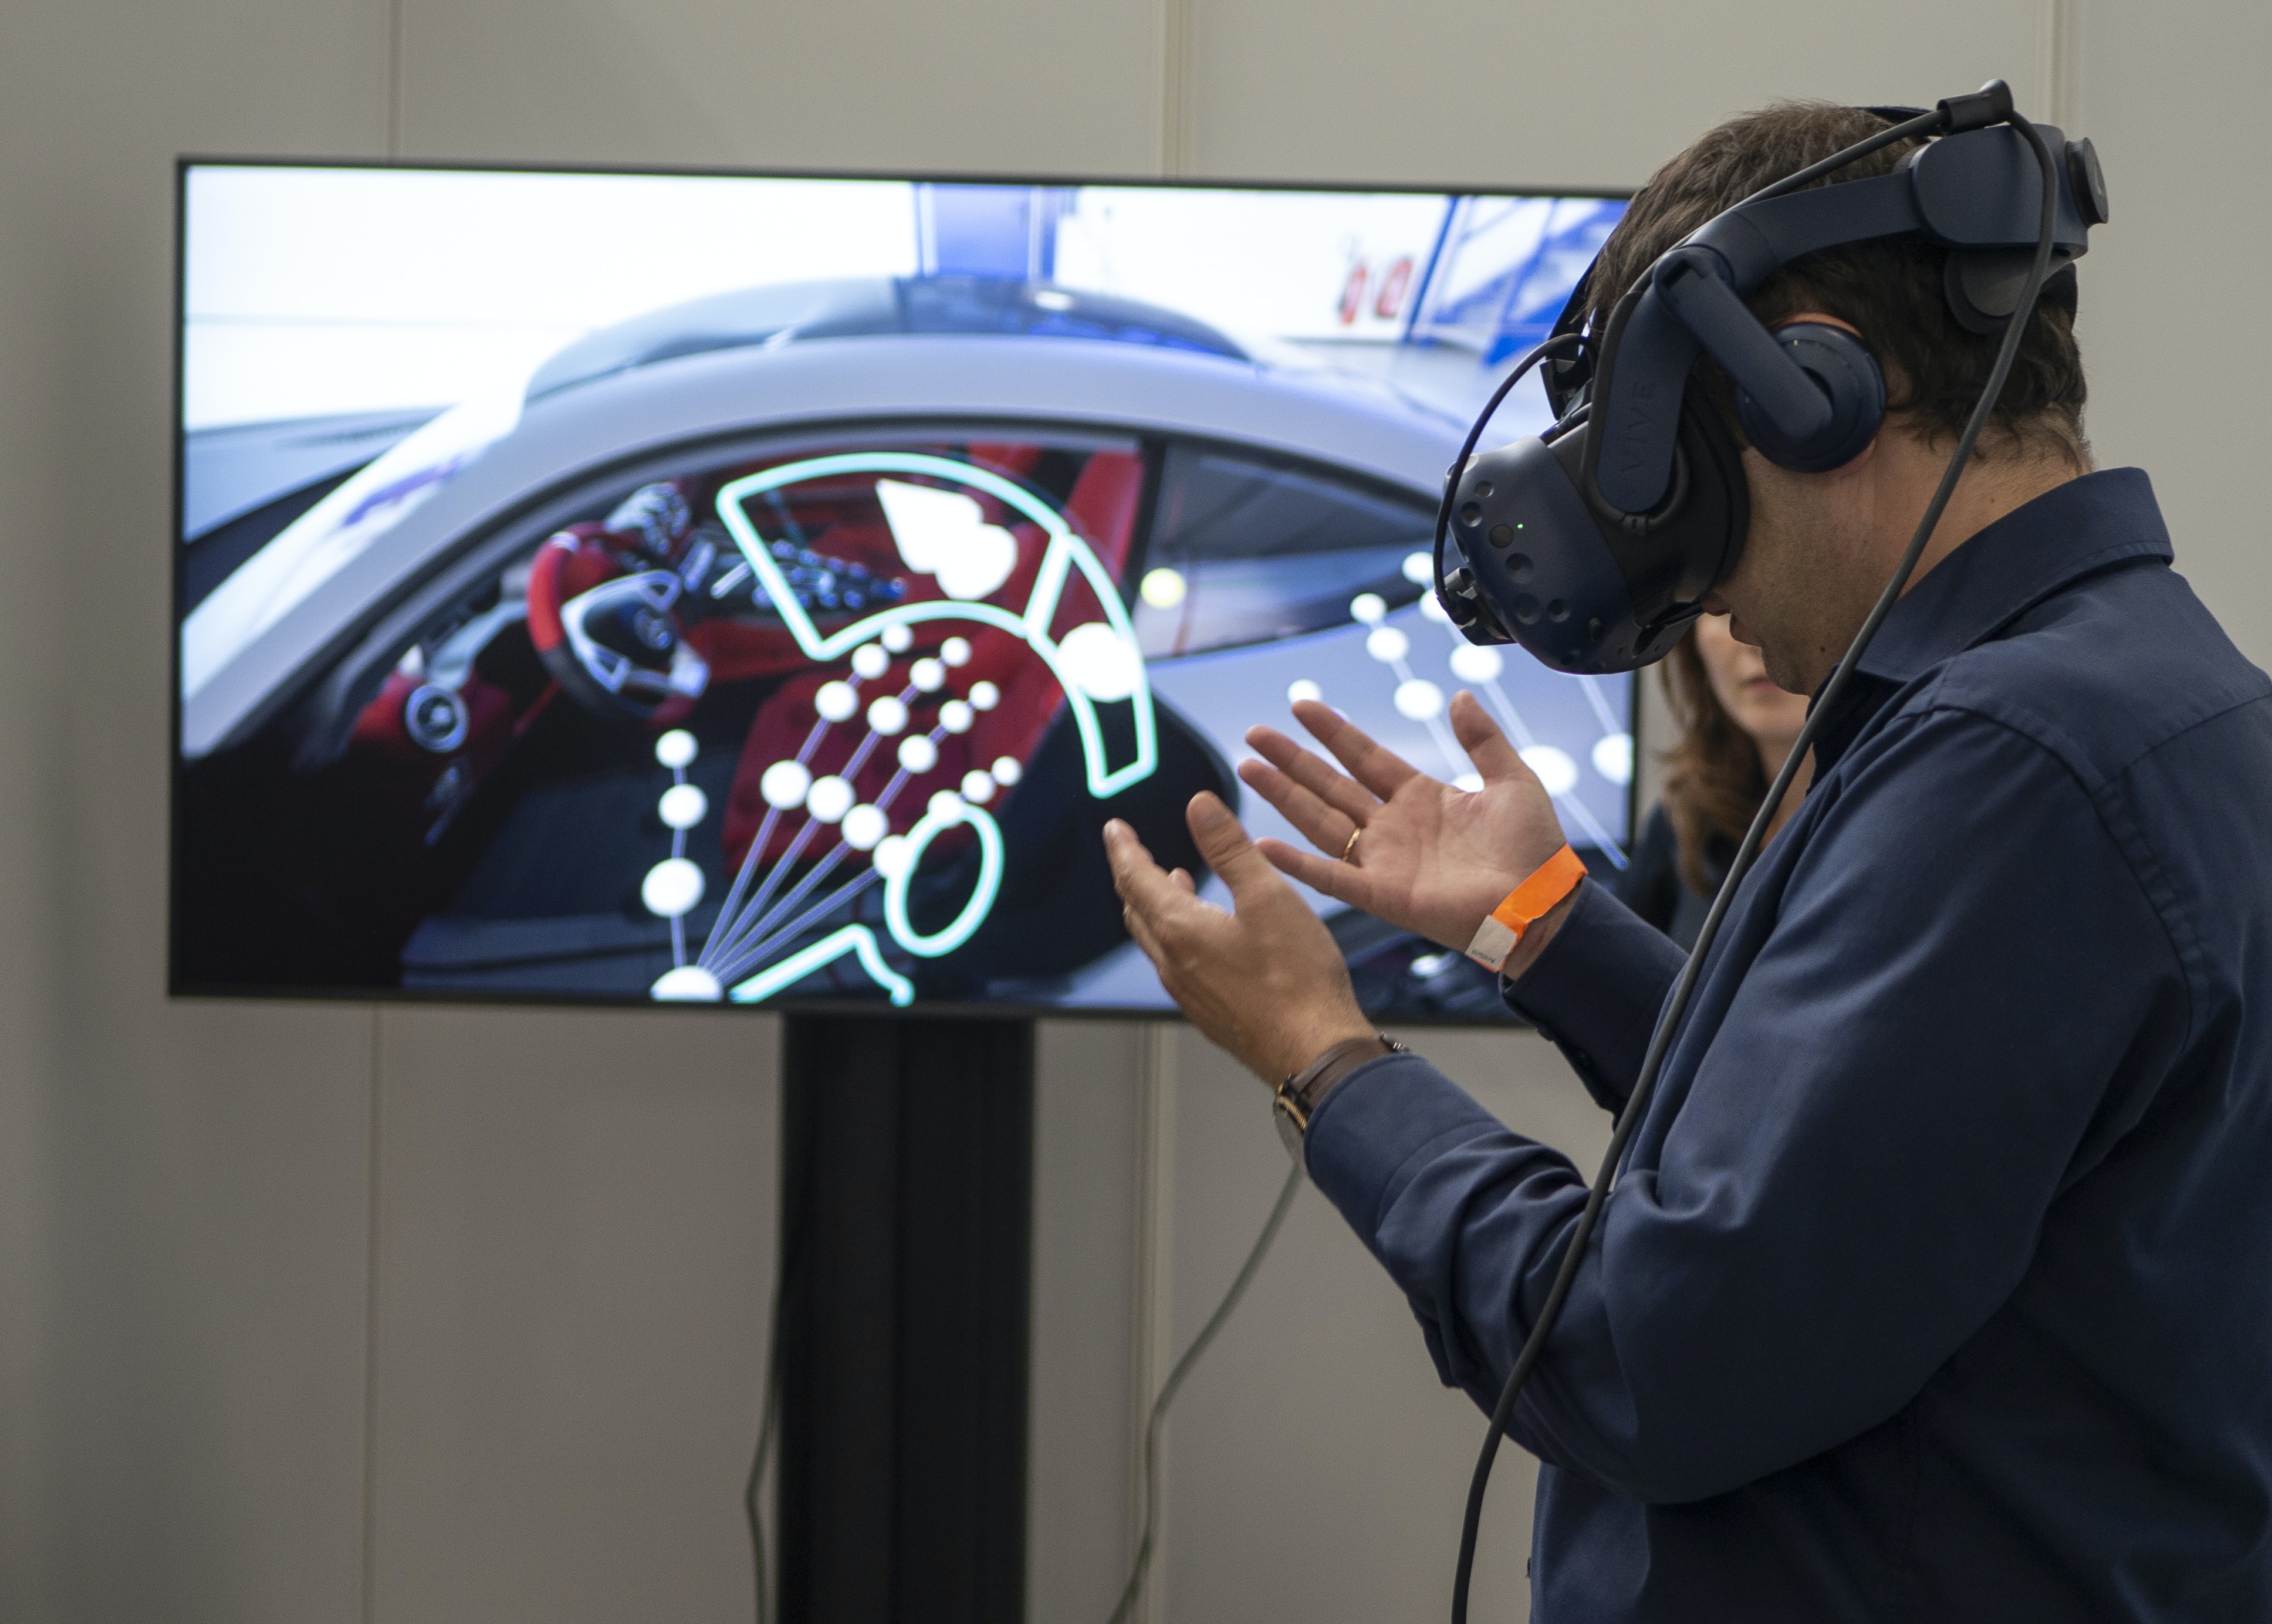 XR Expo 2019: معرض للواقع الافتراضي (VR) والواقع المعزز (AR) والواقع المختلط (MR) والواقع الممتد (XR)